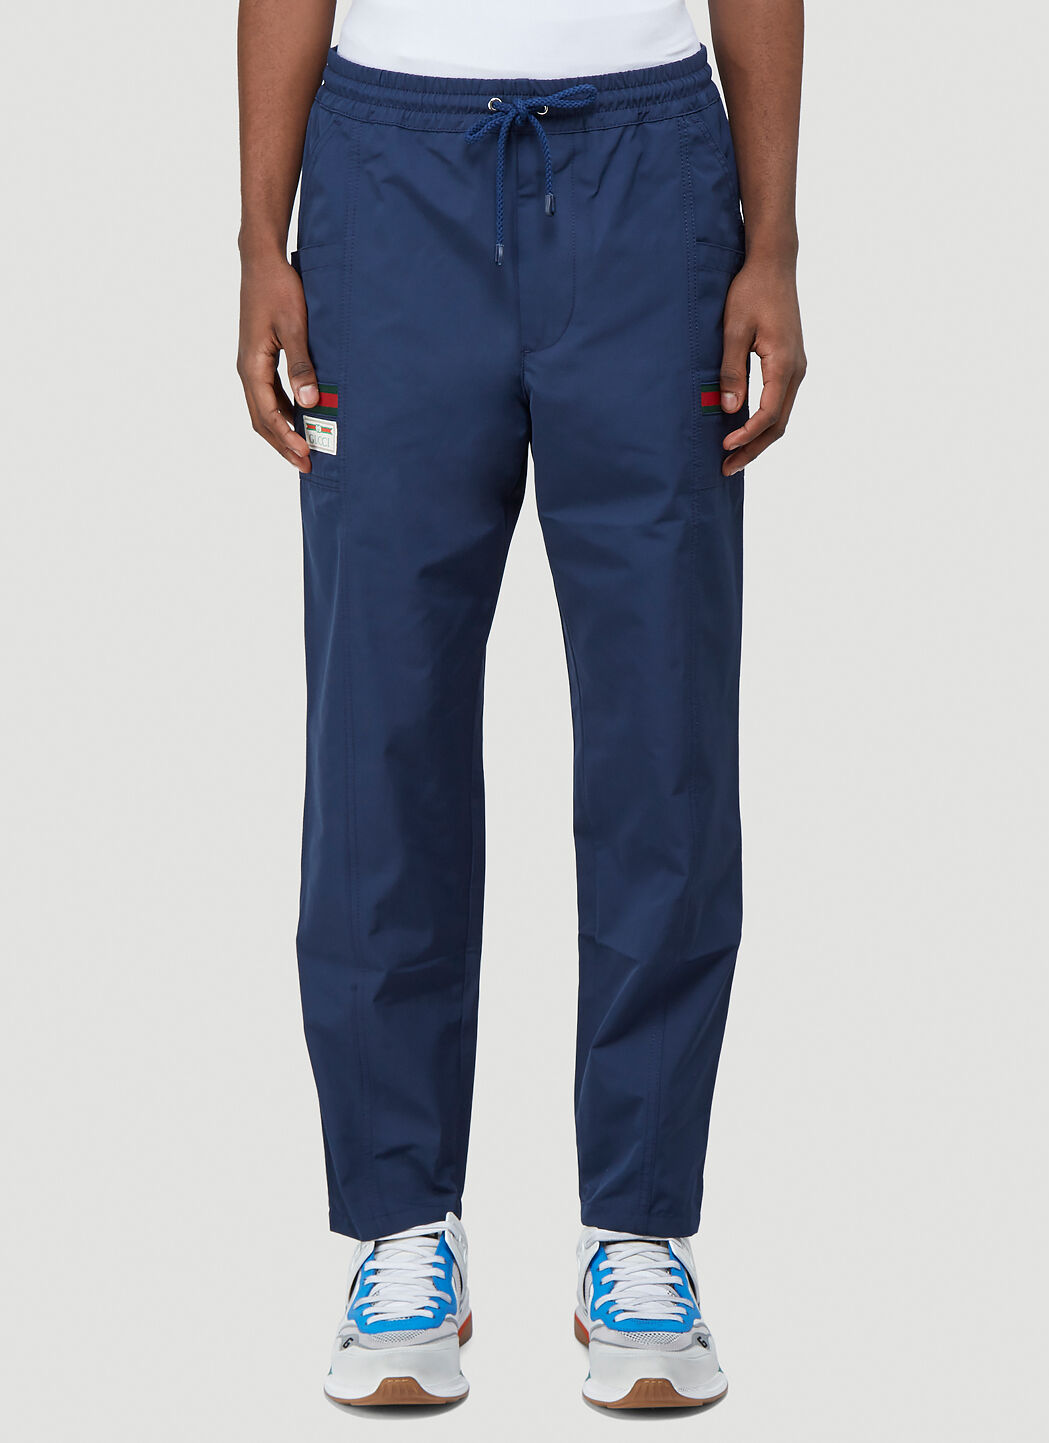 Gucci GG Monogram Technical Jersey Jogging Track Pants | eBay